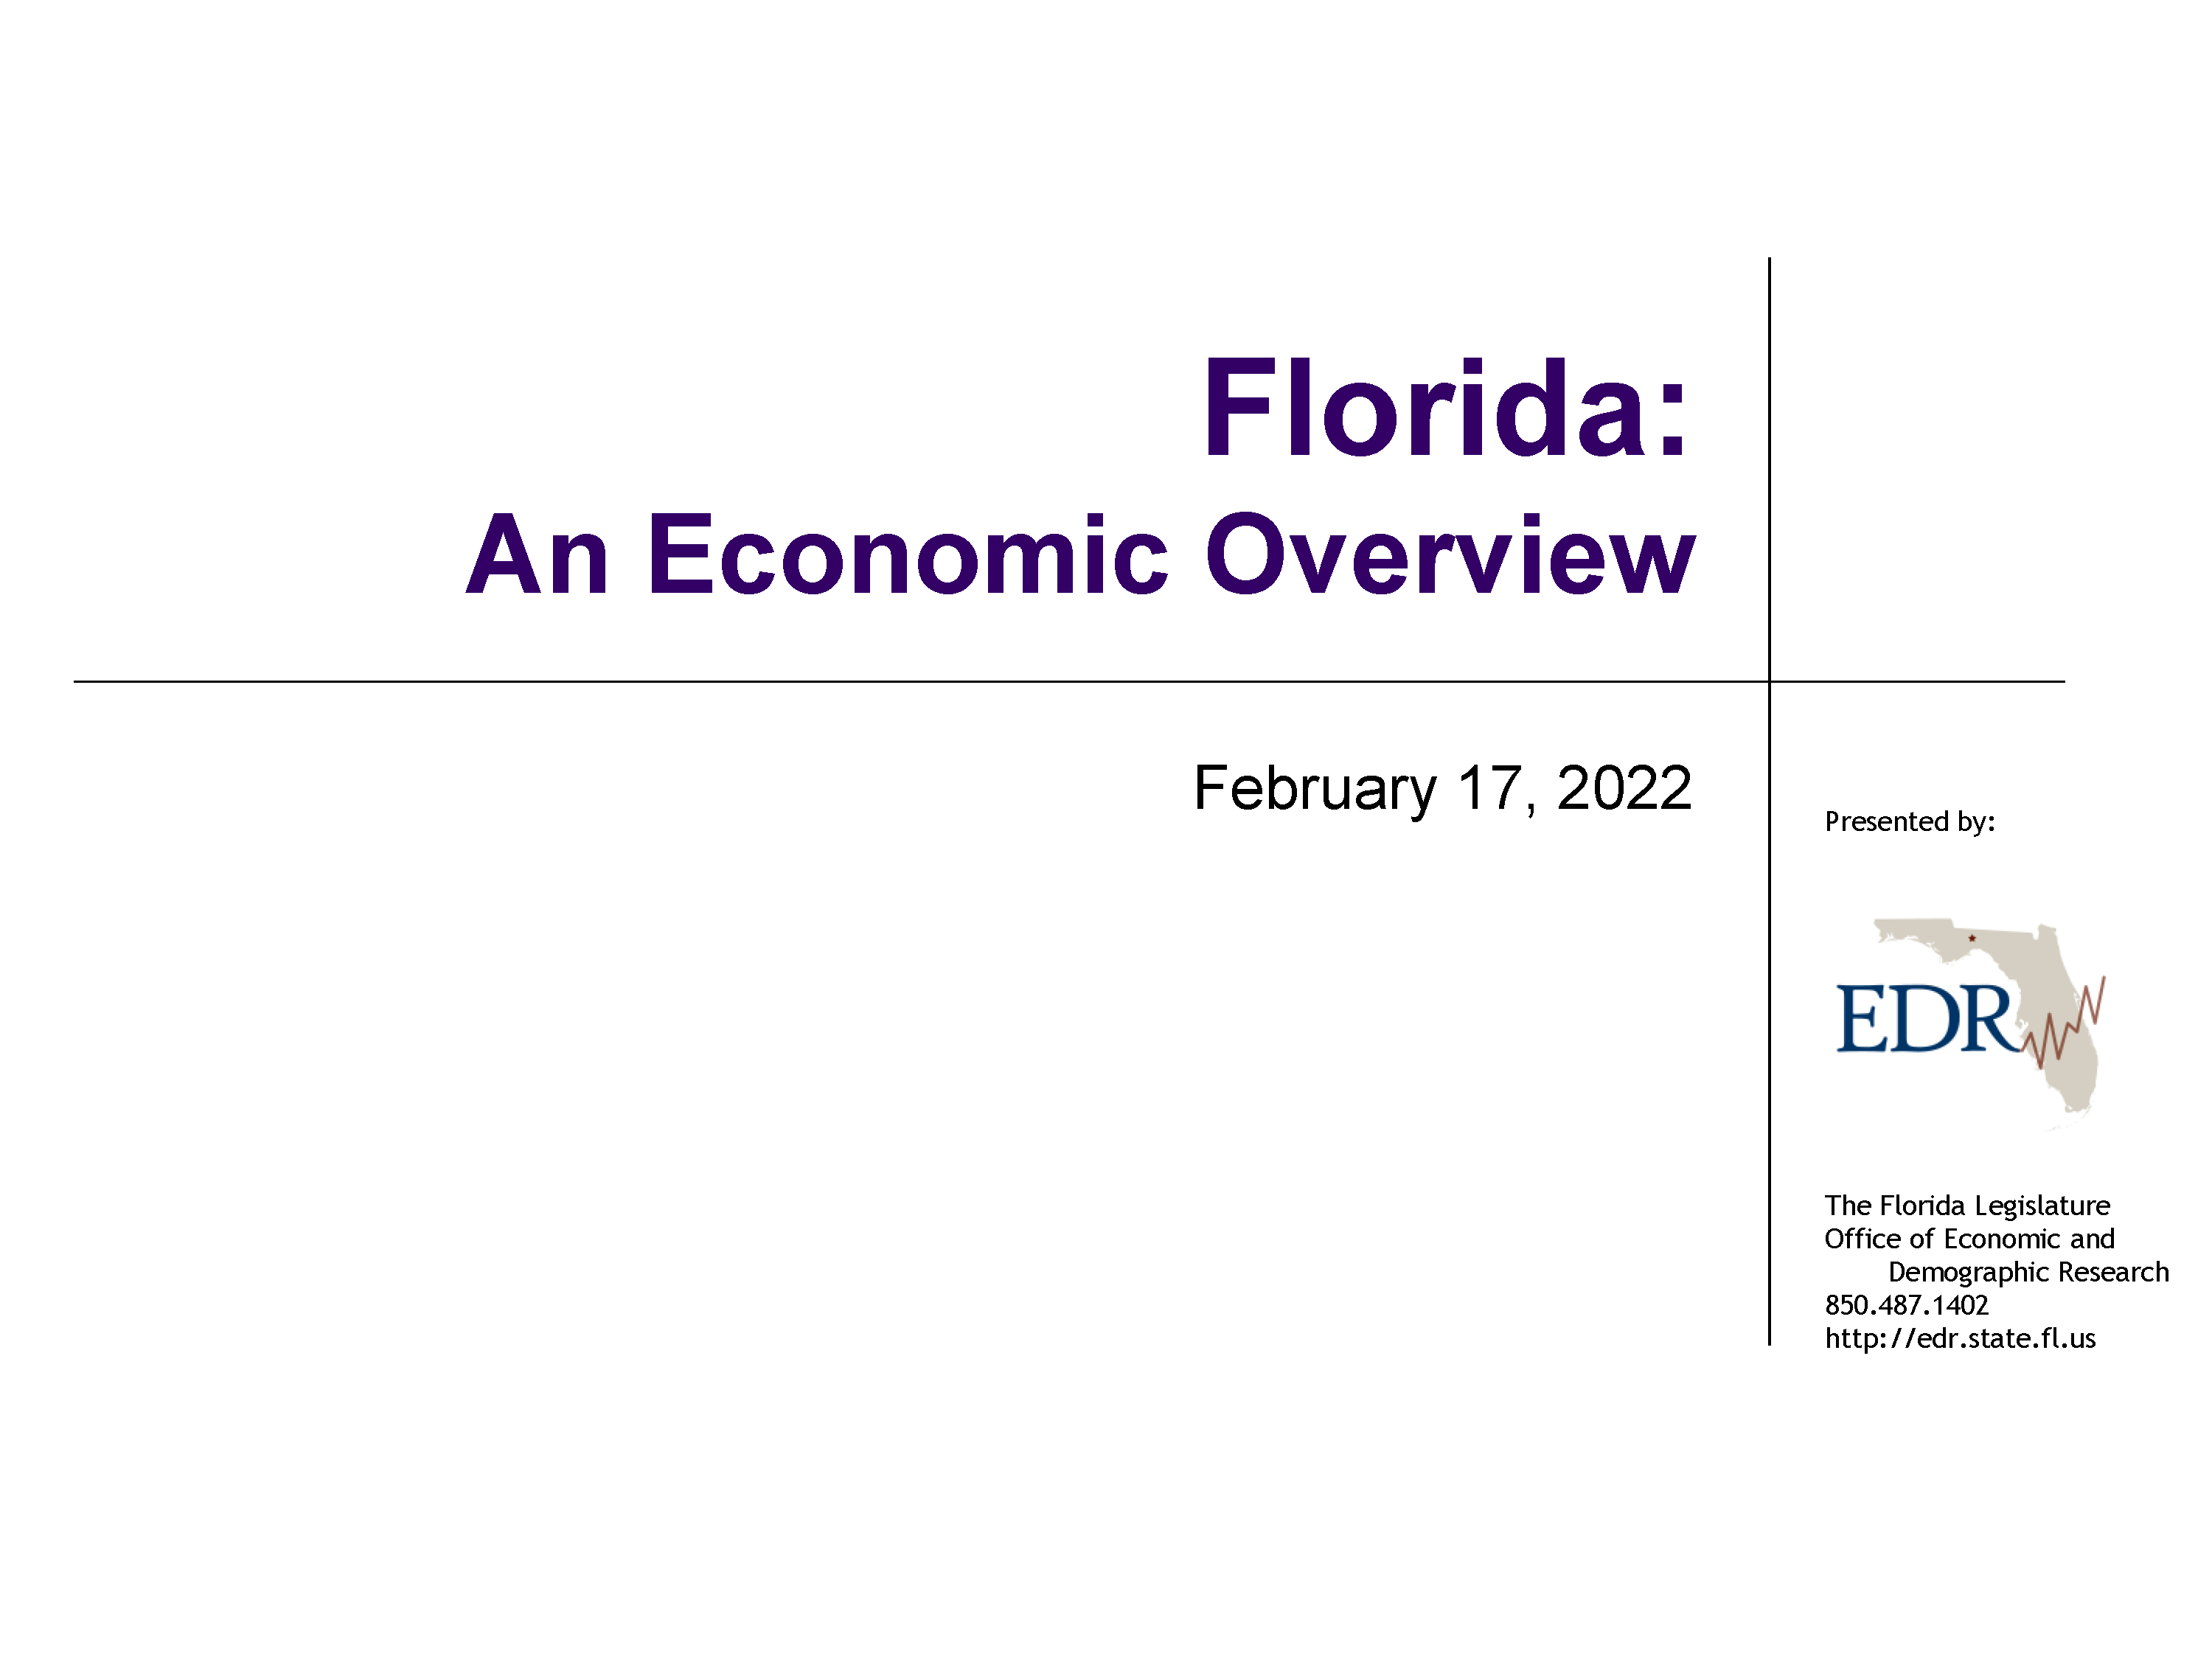 FL Economic Overview cover